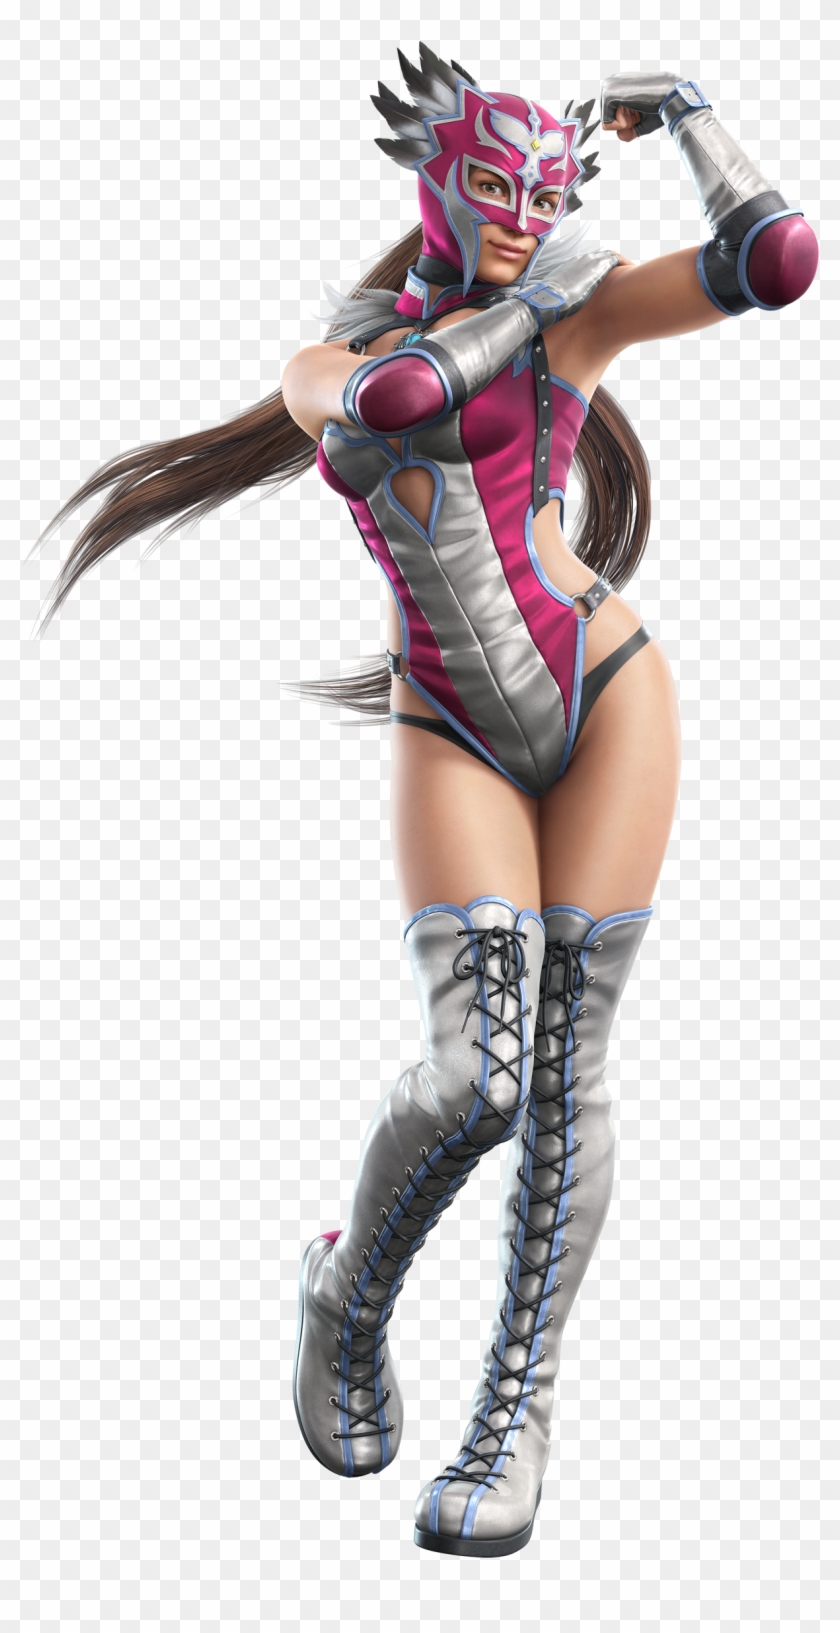 Jaycee From Tekken In The Ga-hq Video Game Character - Julia Chang Tekken Tag 2 Clipart #2409348